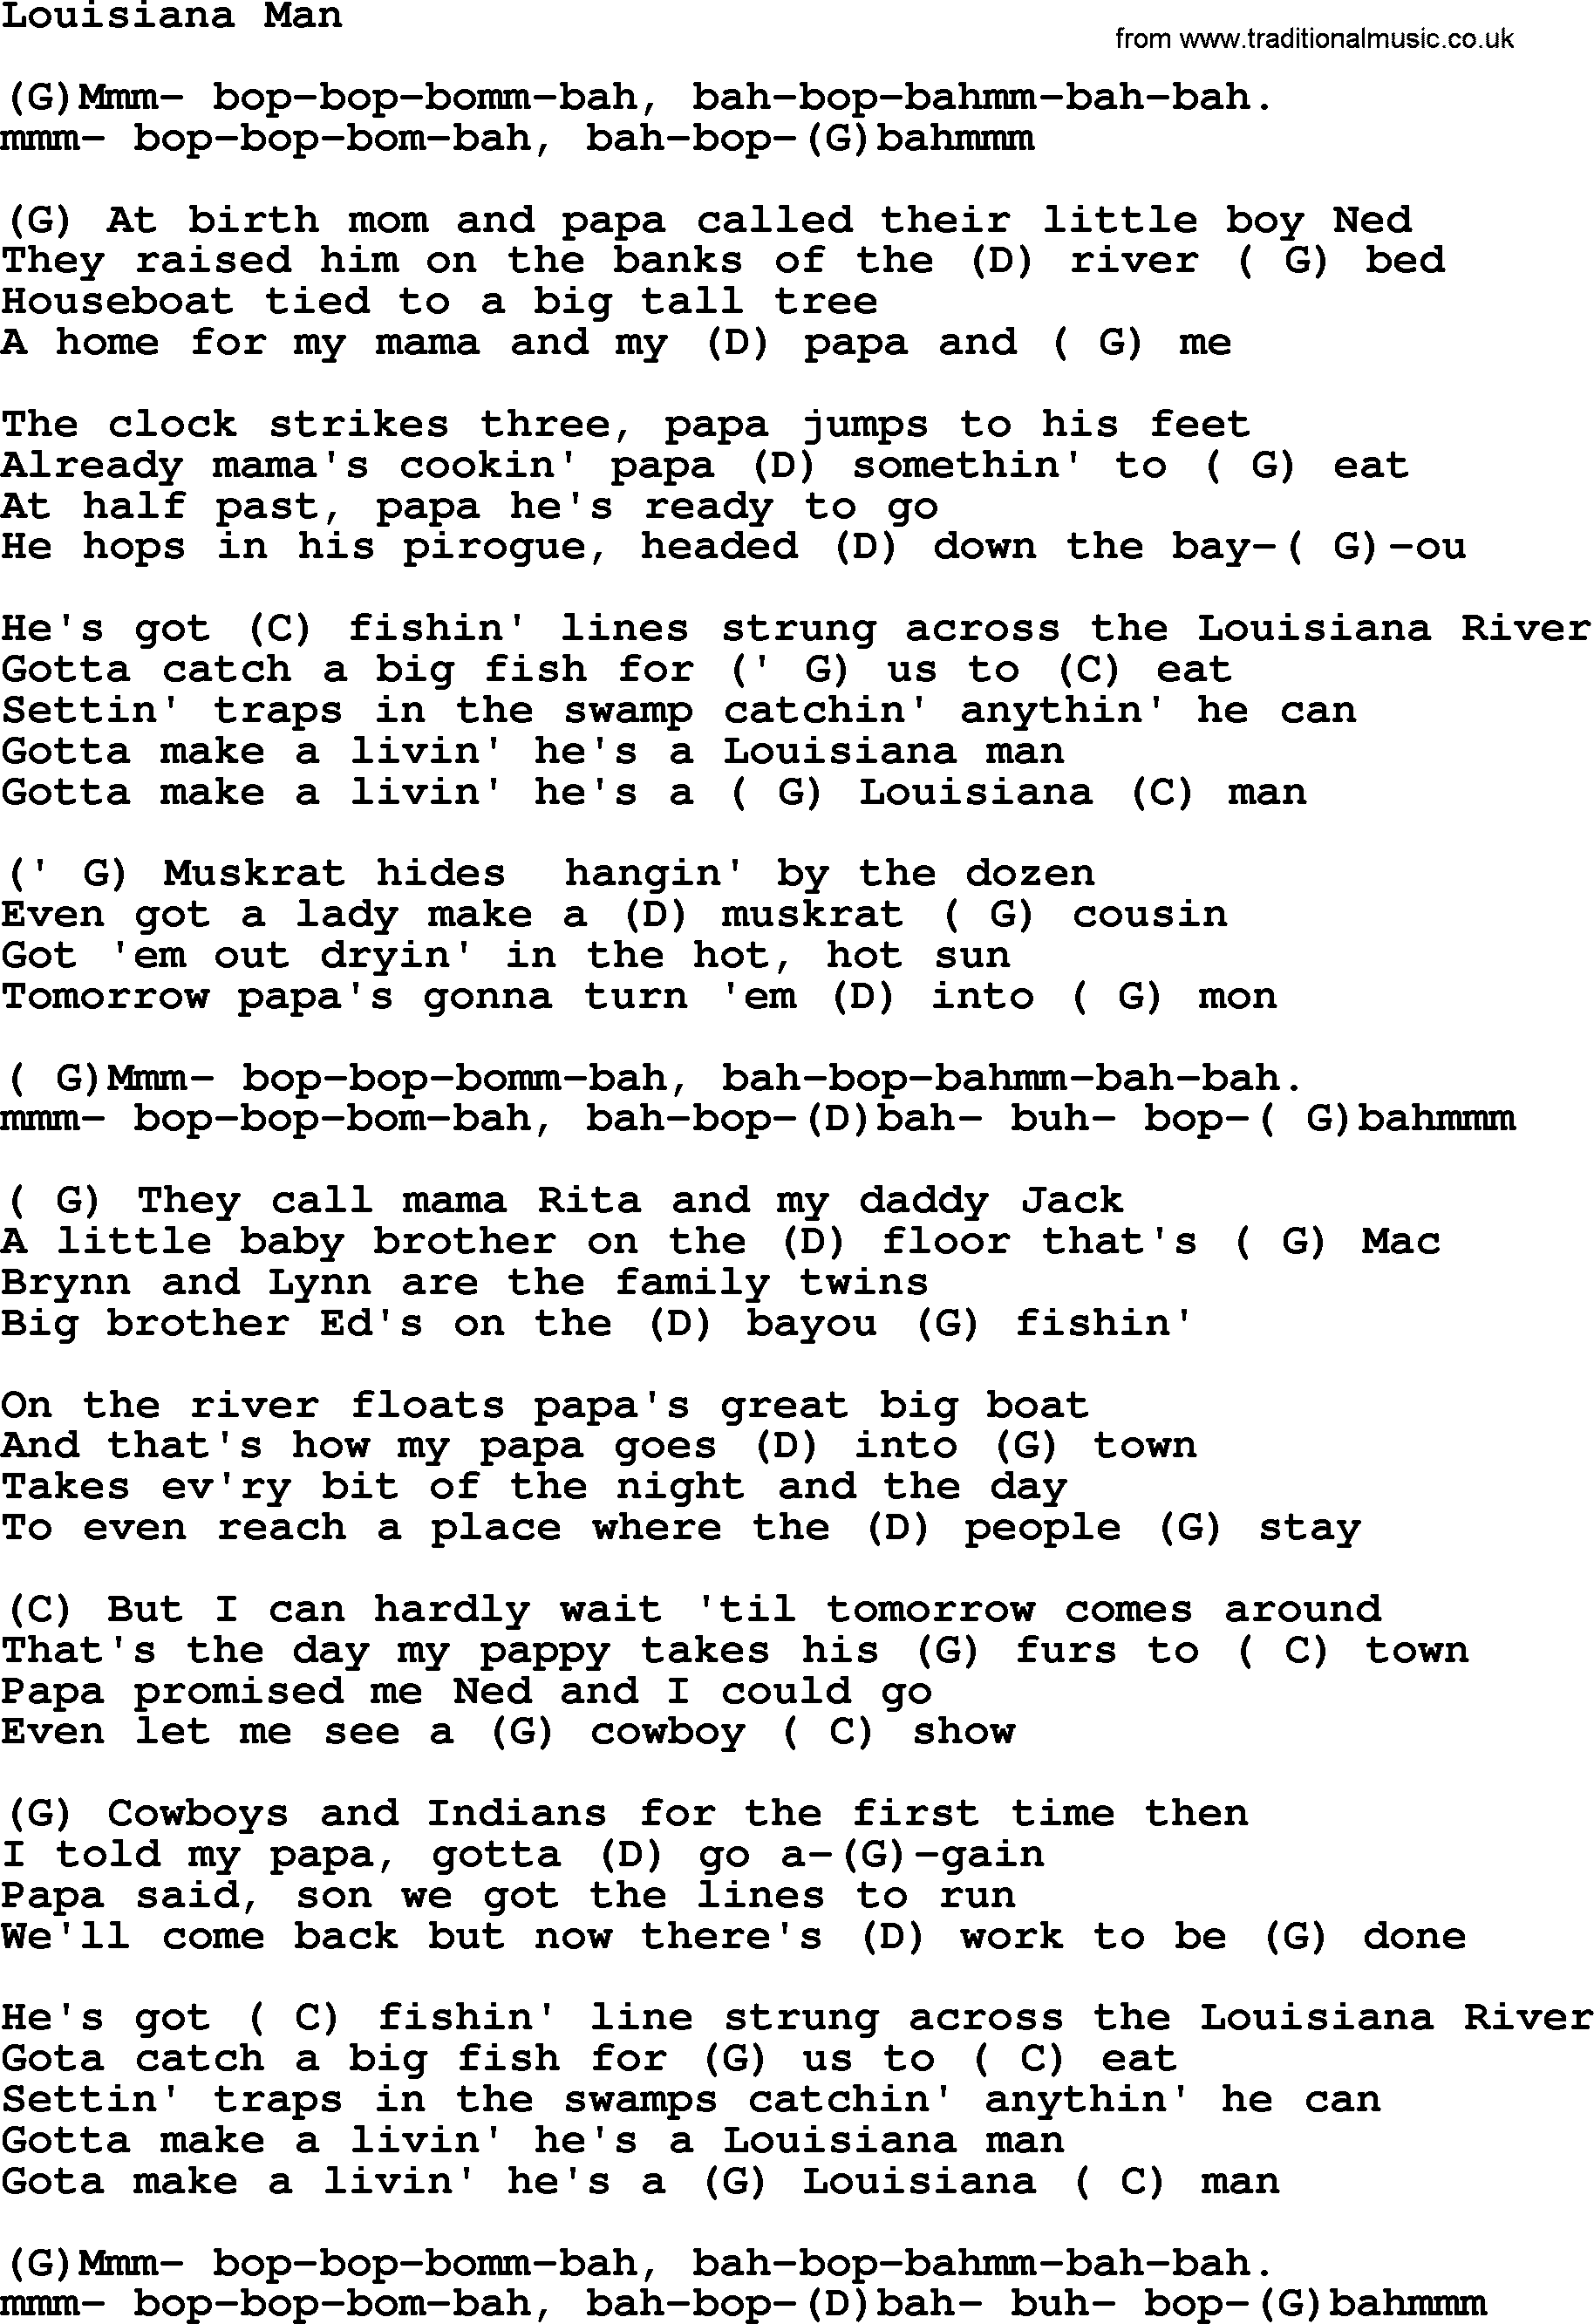 Johnny Cash song Louisiana Man, lyrics and chords